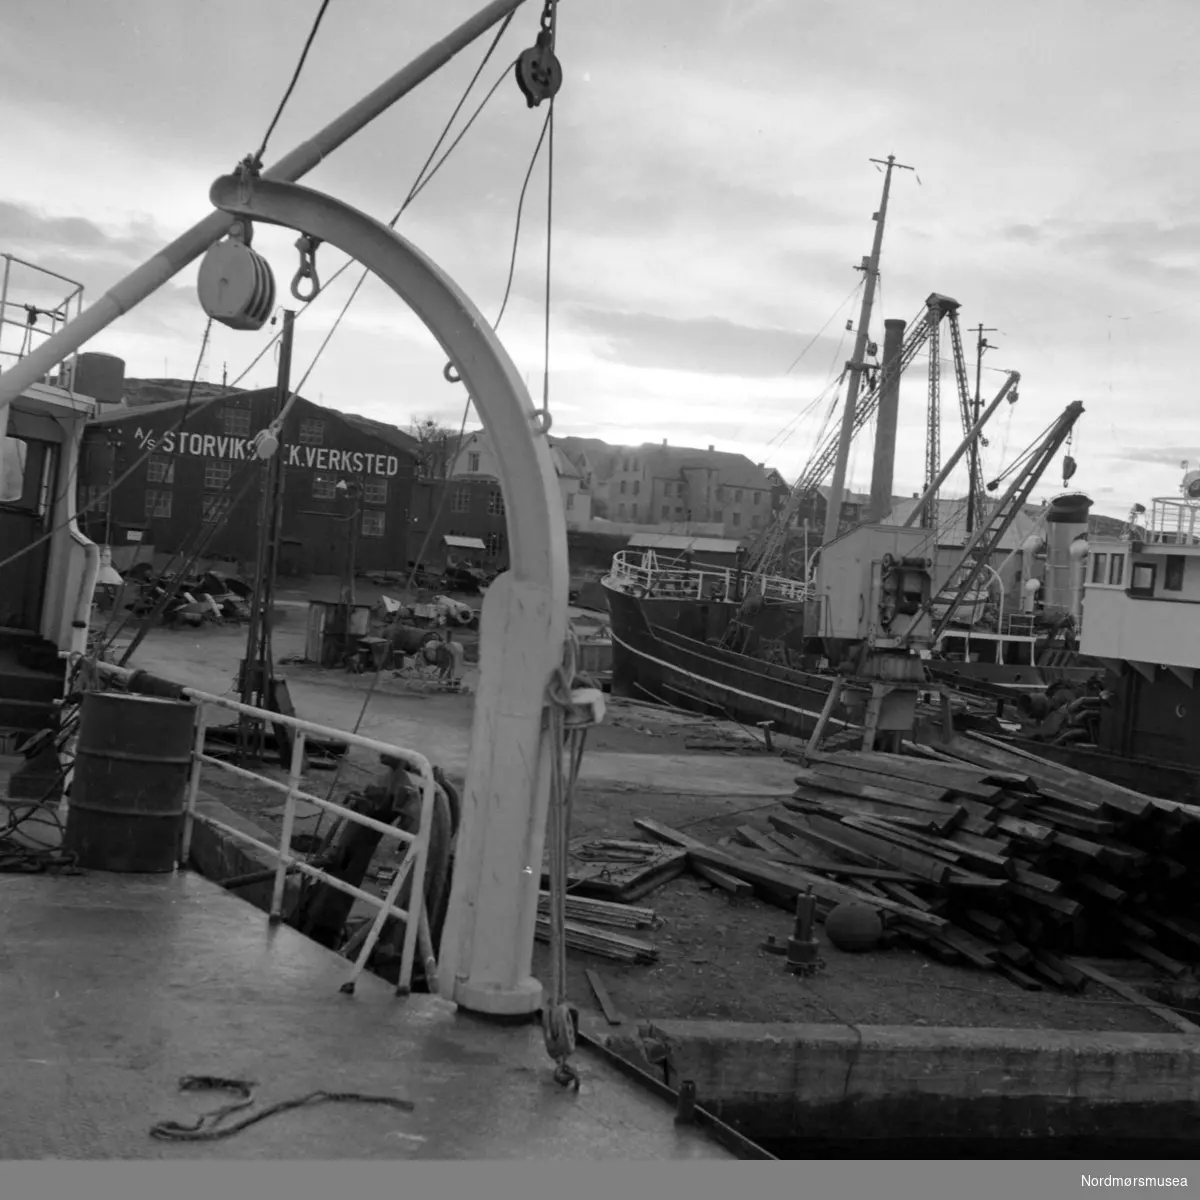 Foto fra Storvik Mekaniske verksted i Kristiansund, hvor vi ser blant annet fra fartøyet Masi. Fotograf er Nils Williams. Fra Nordmøre museums fotosamlinger.